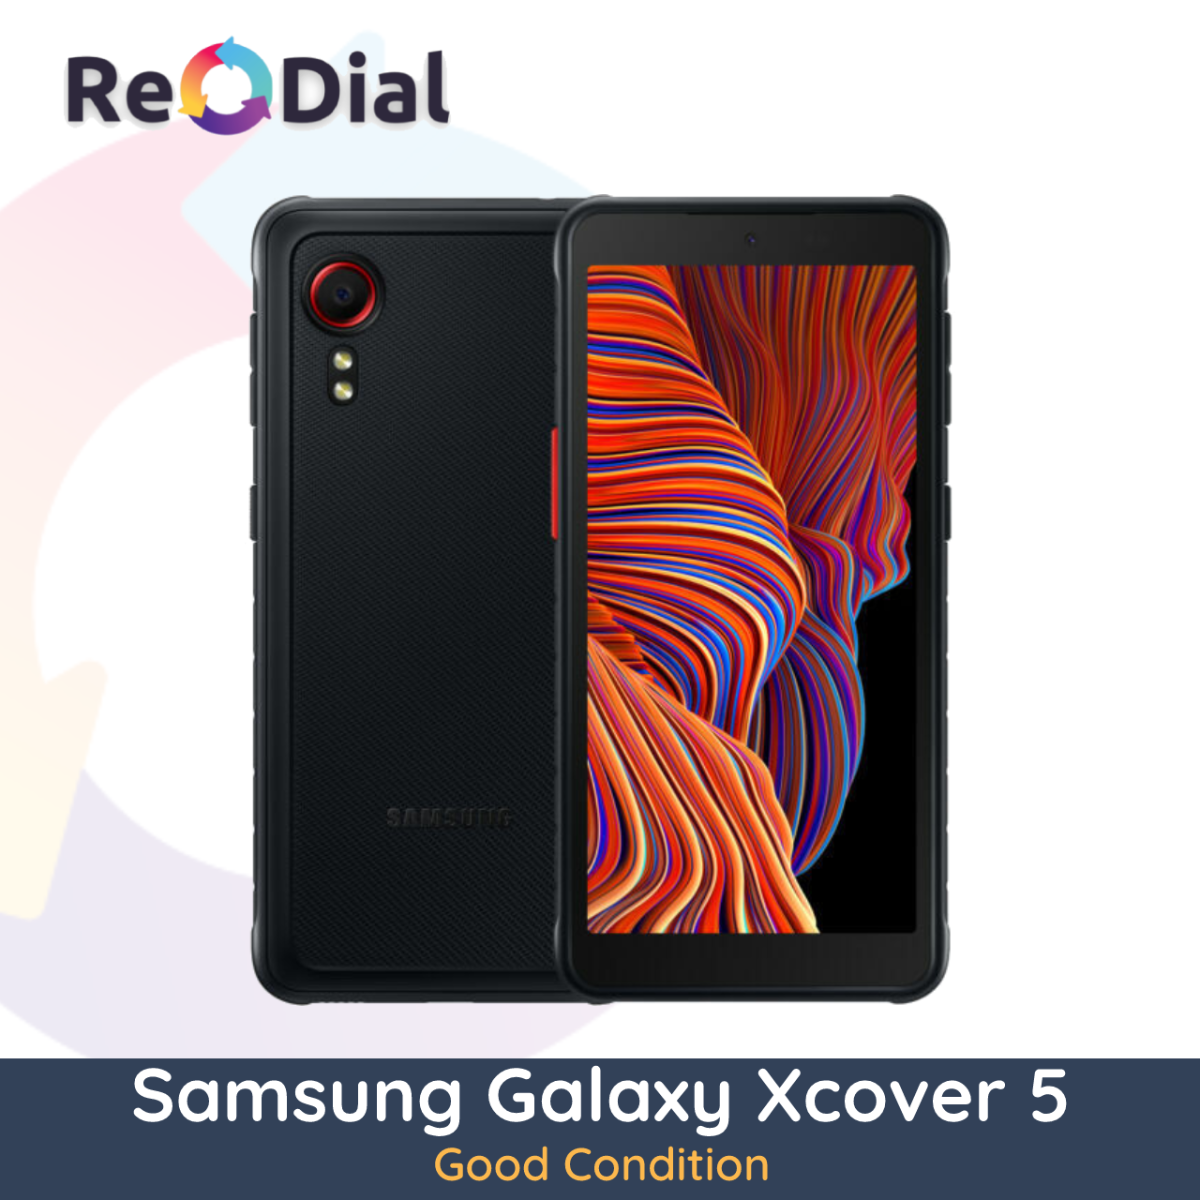 Samsung Galaxy Xcover 5 - Good Condition